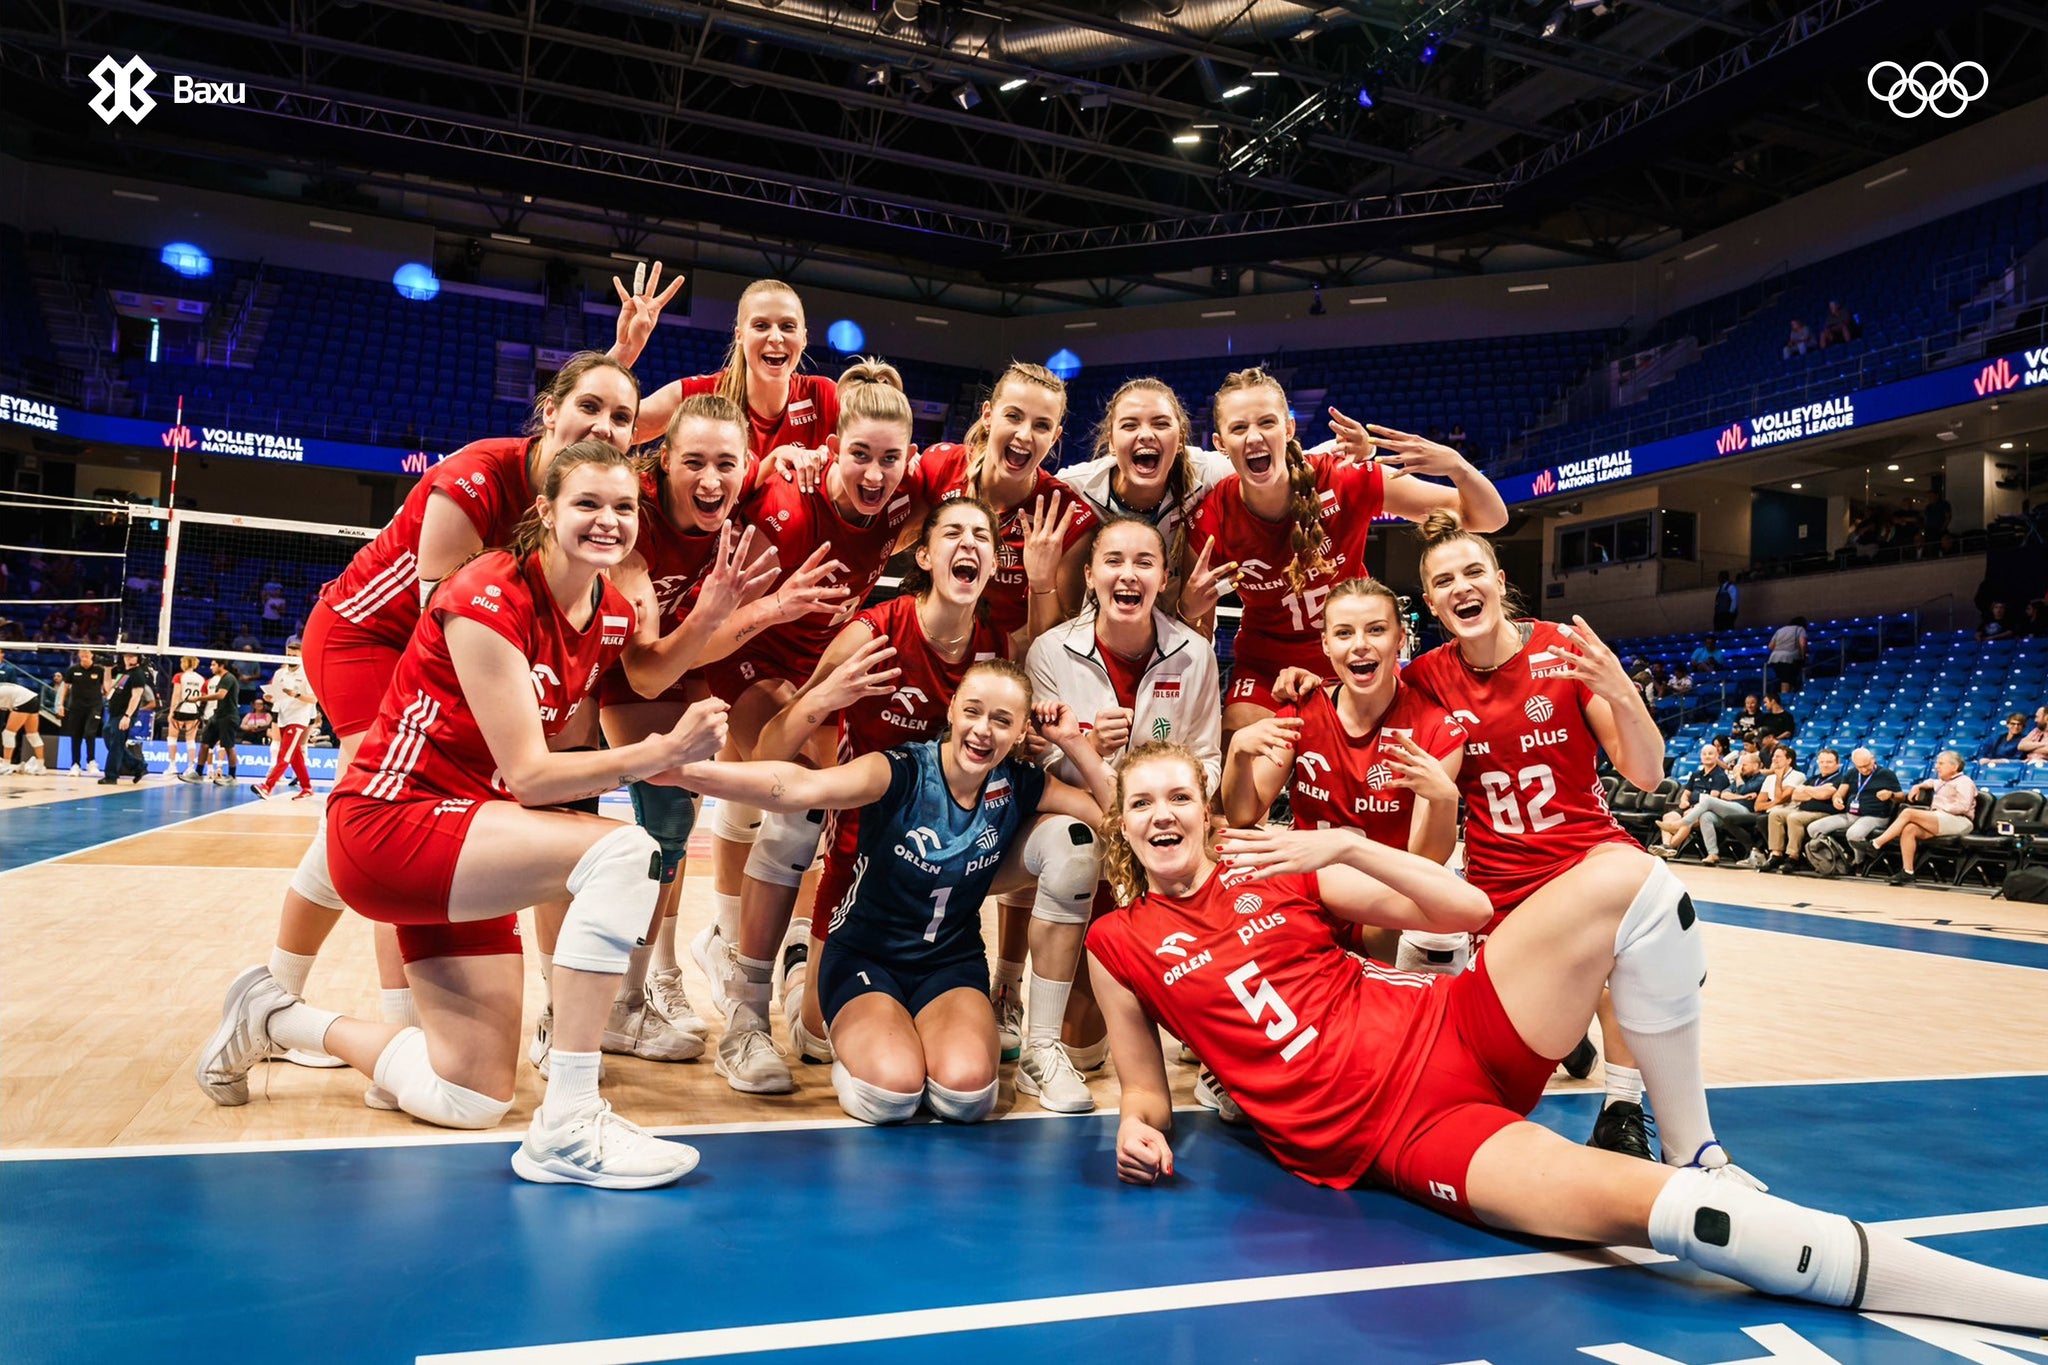 Baxu - Poland Volleyball Team - Equipo de Voleibol de Polonia - Juegos Olímpicos 2024 - Olympic Games Paris 2024